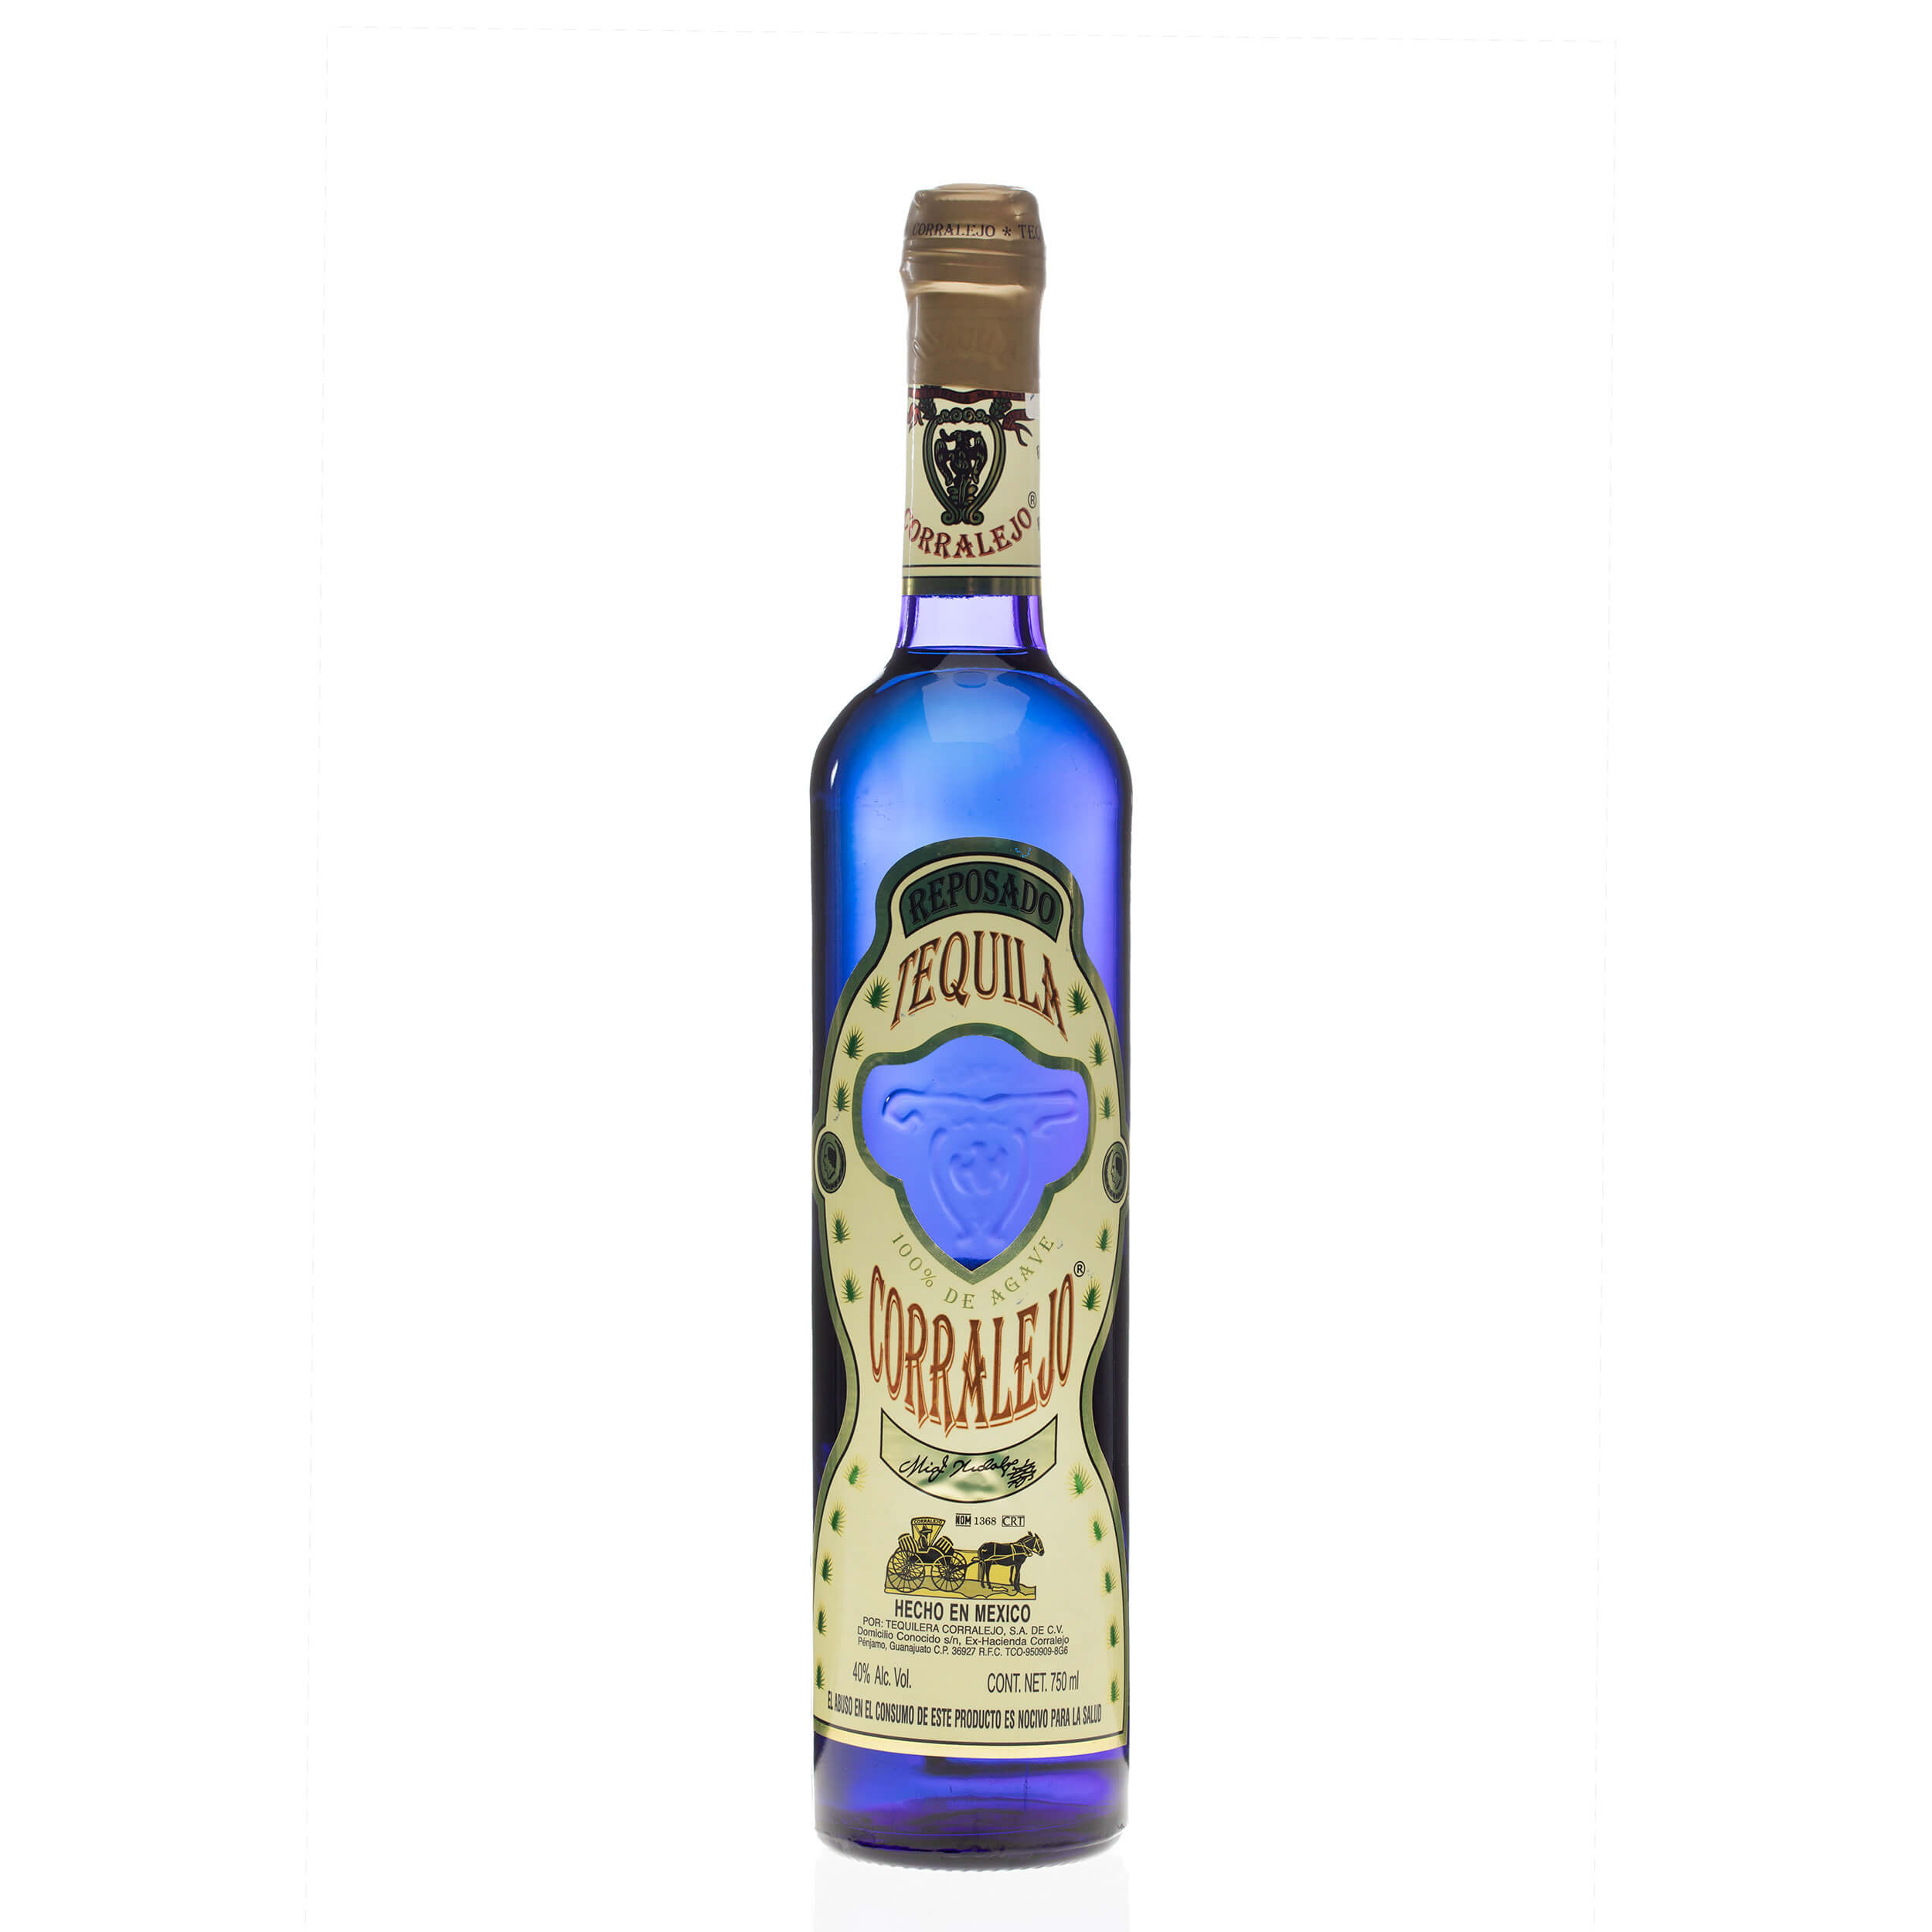 Product image for “Tequila Corralejo Reposado”